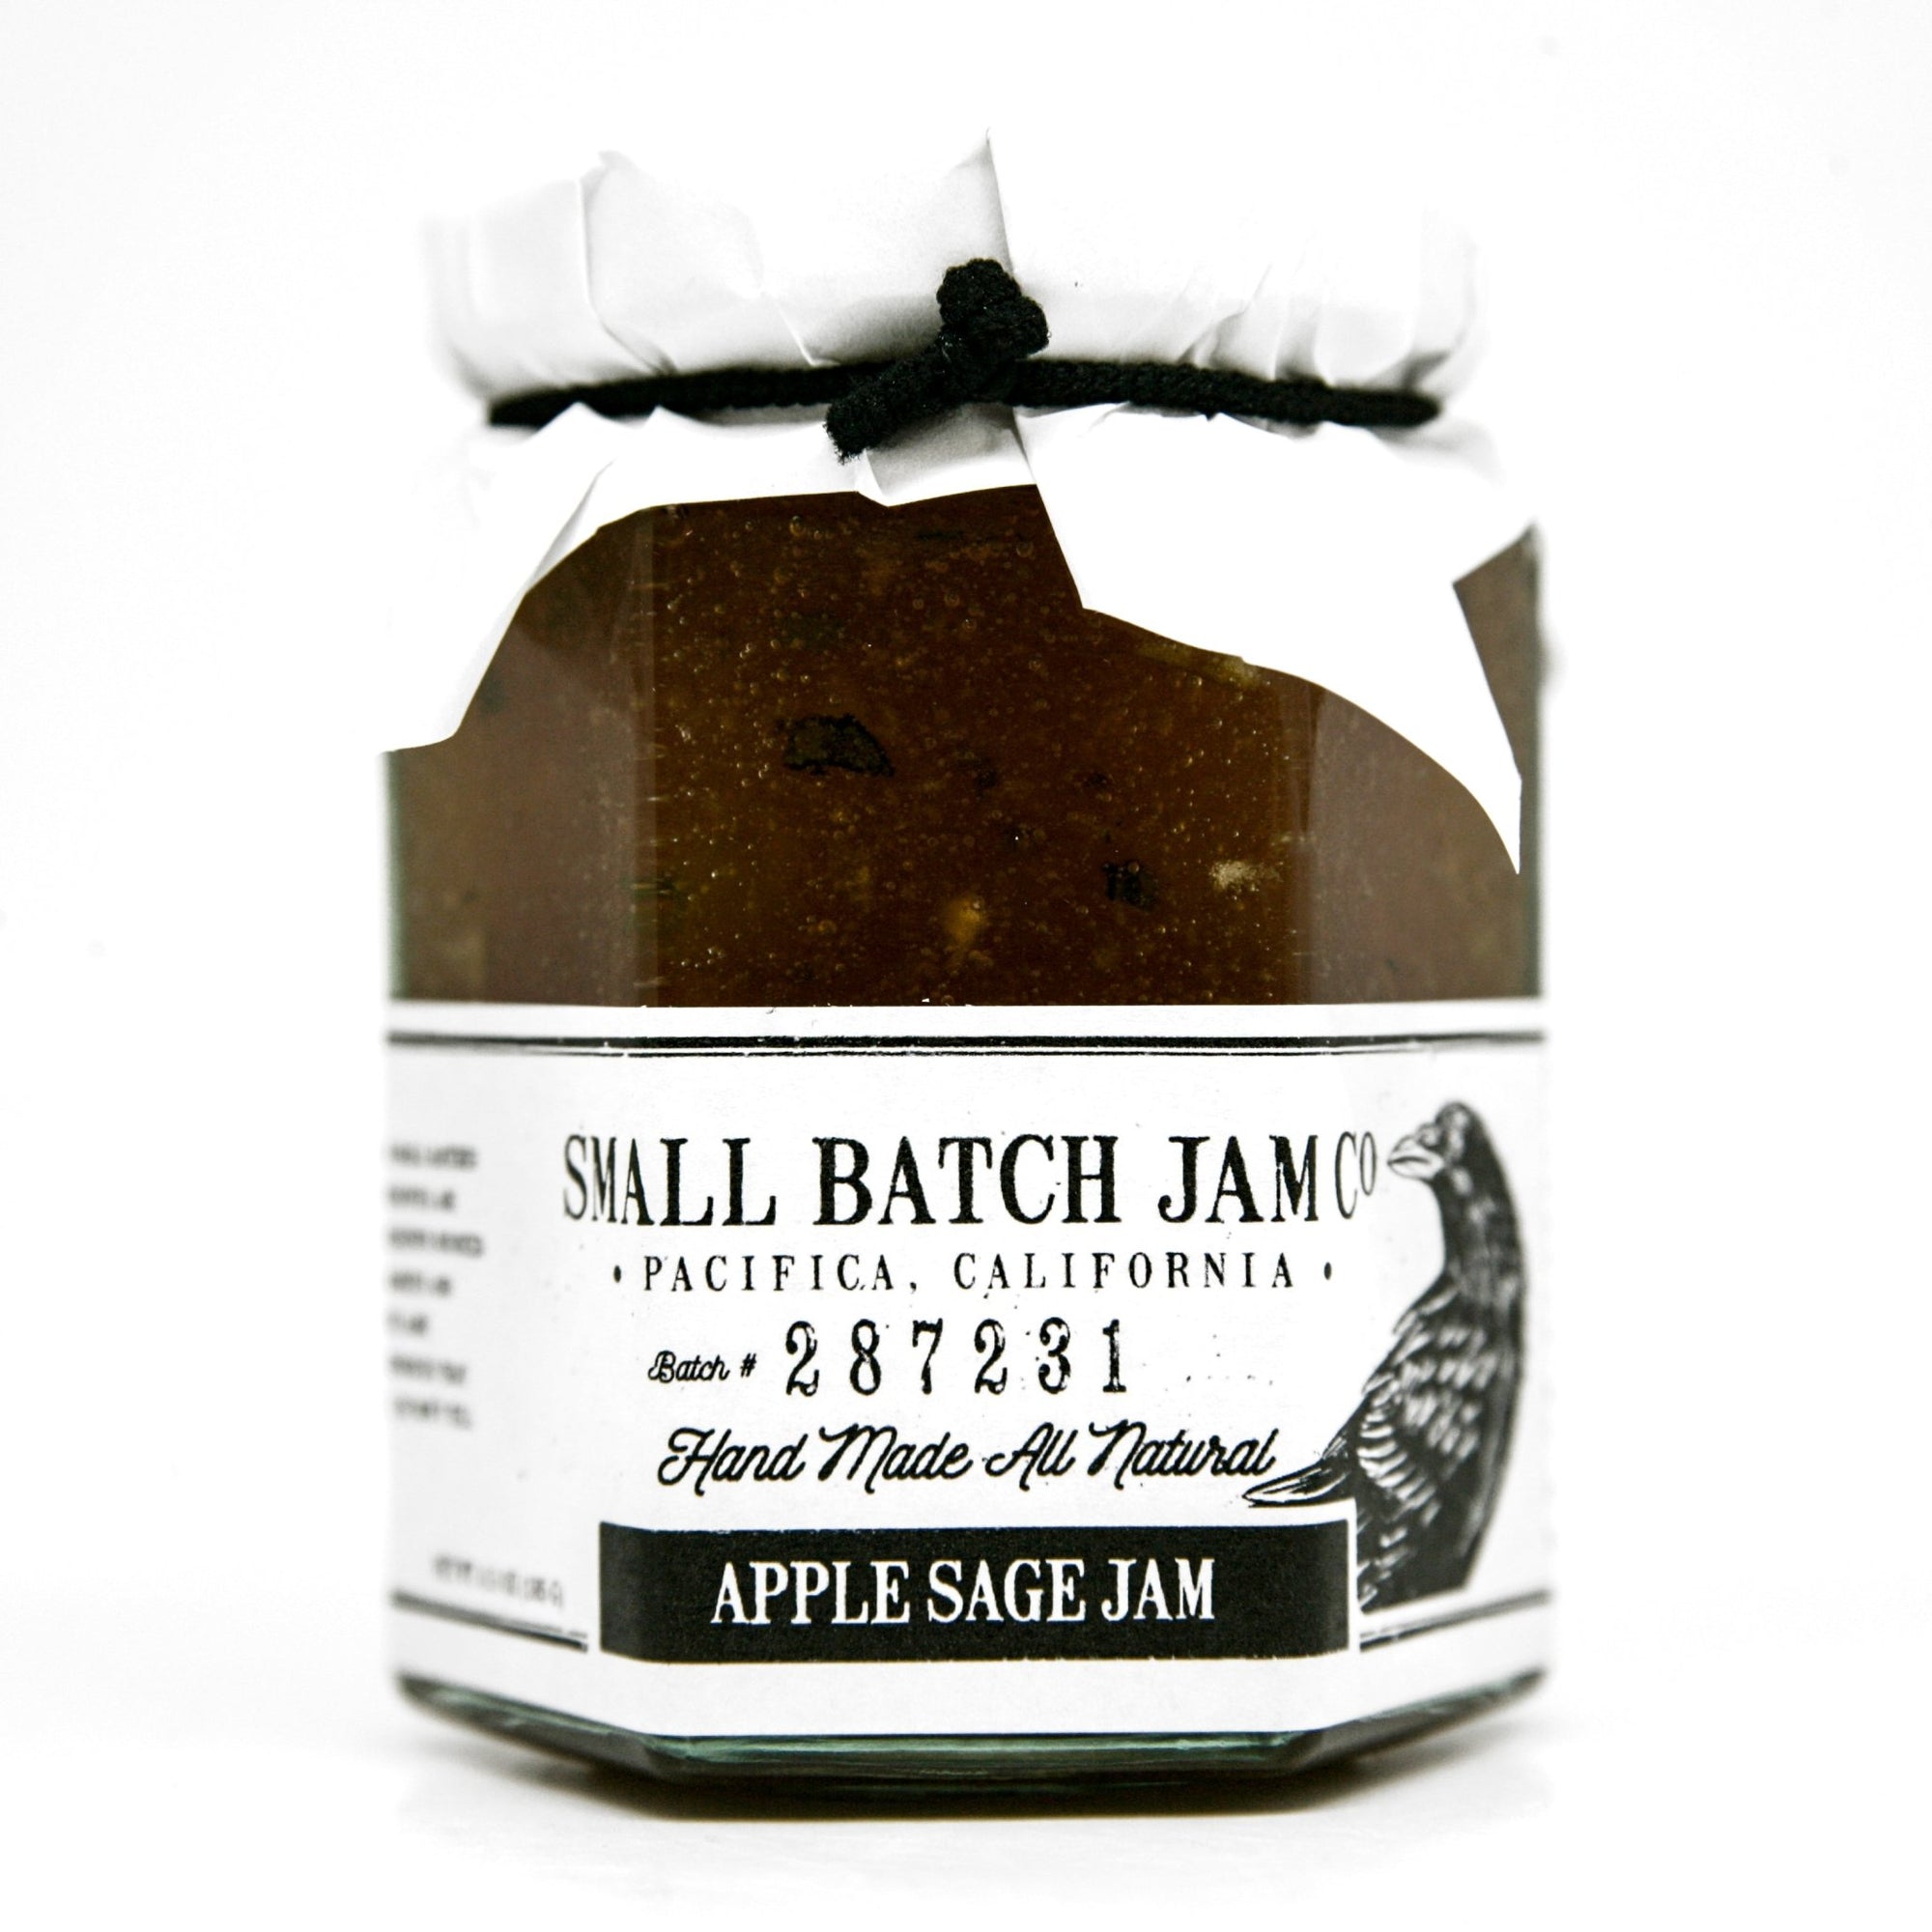 Apple Sage Jam - Small Batch Jam Co